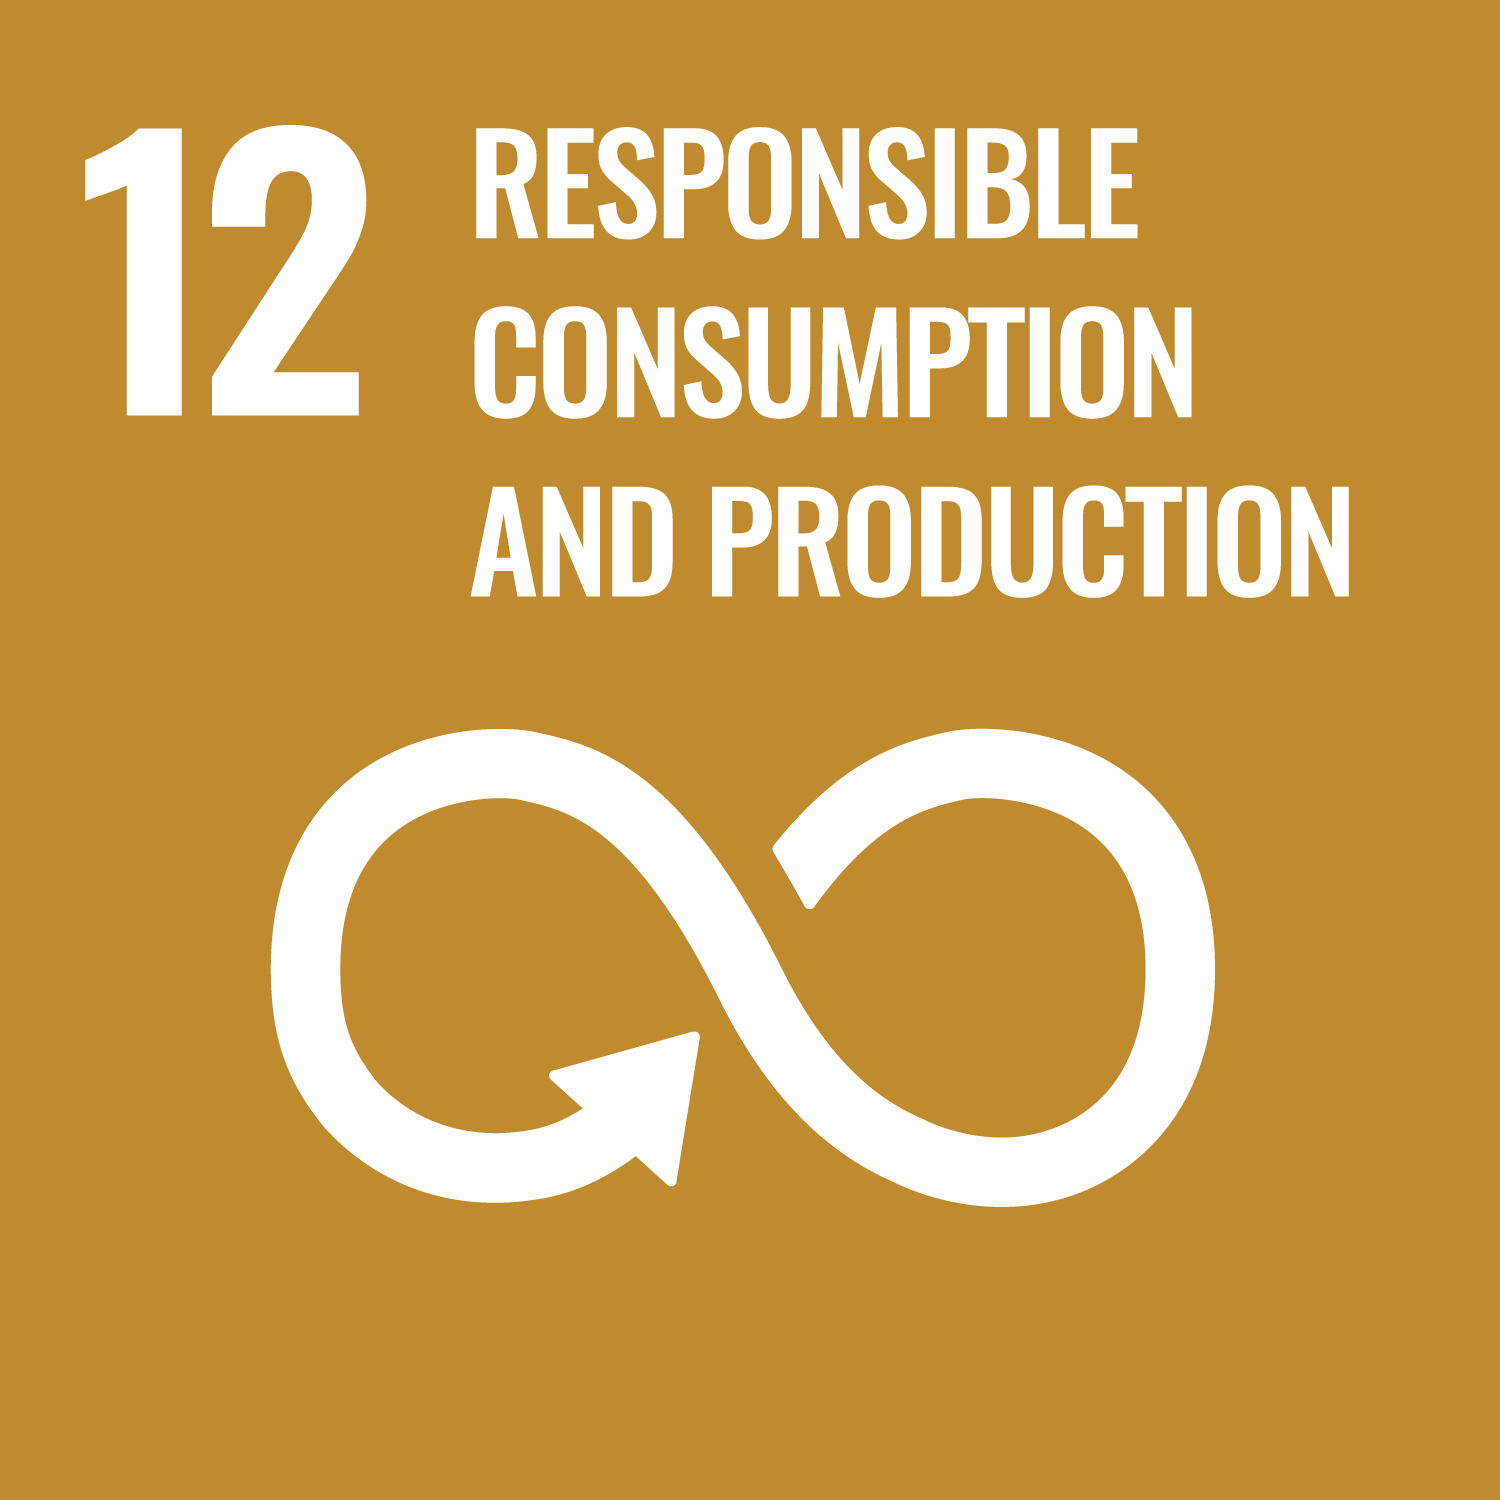 pict: SDGs goal12  Responsible consumption and production